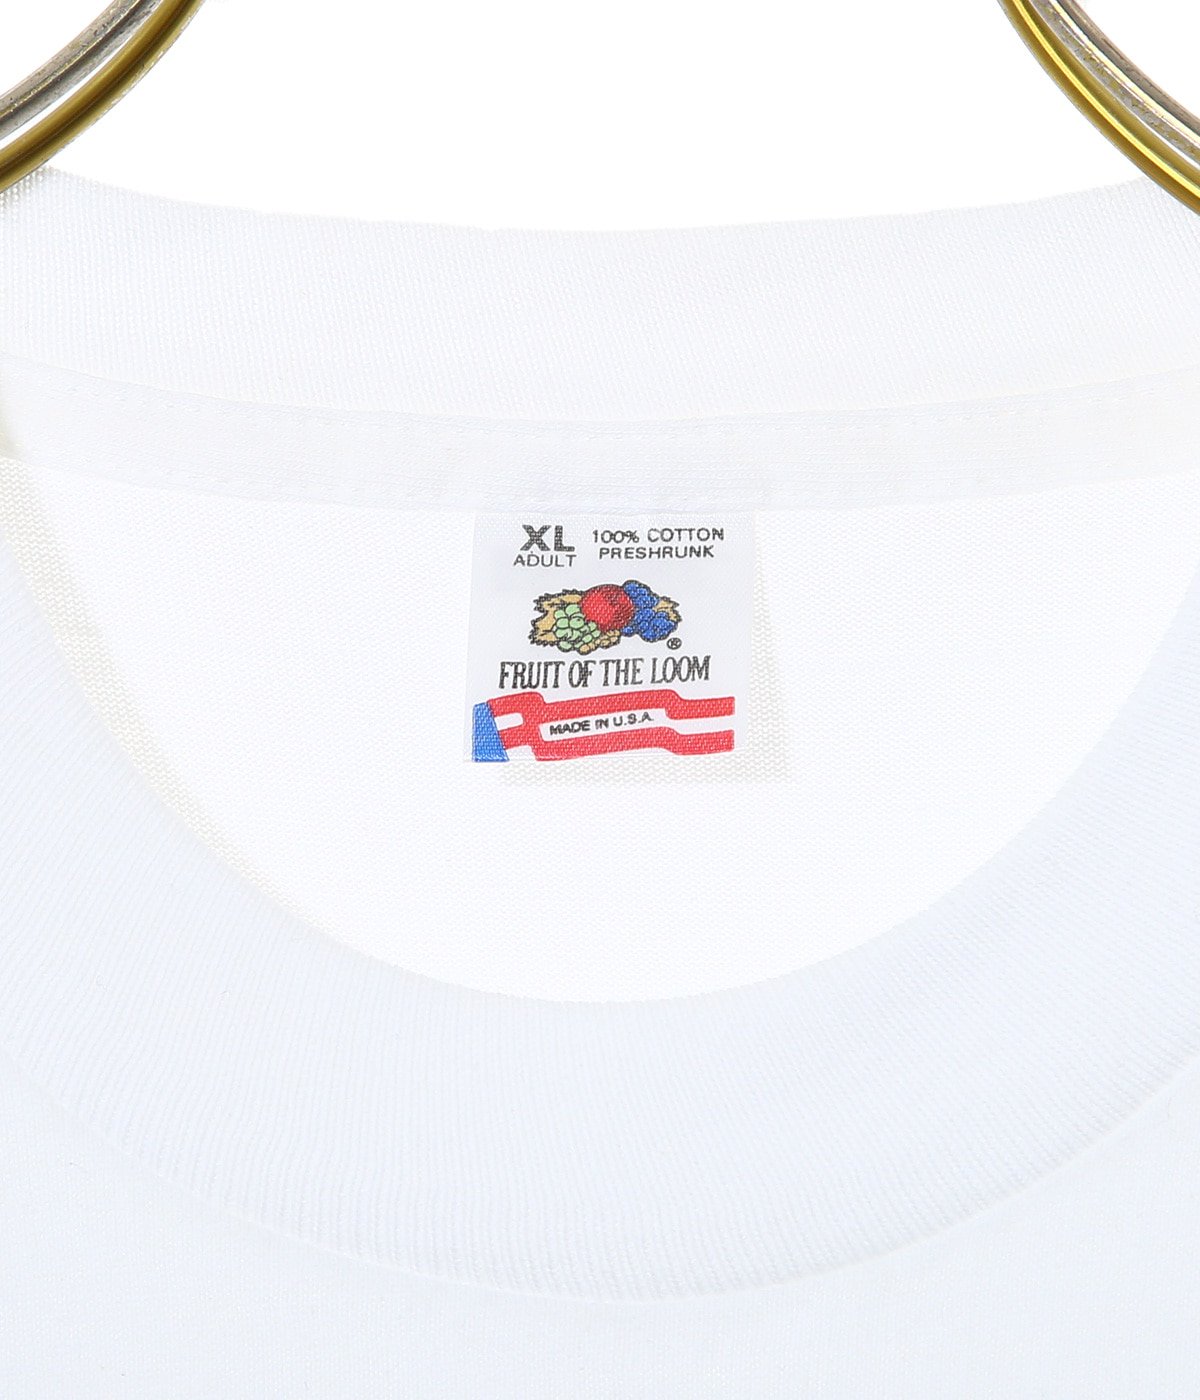 Used 90 S Fotofolio Eadweard Muybridge T Shirt Xl ホワイト 通常商品 通販 Arknets アークネッツ